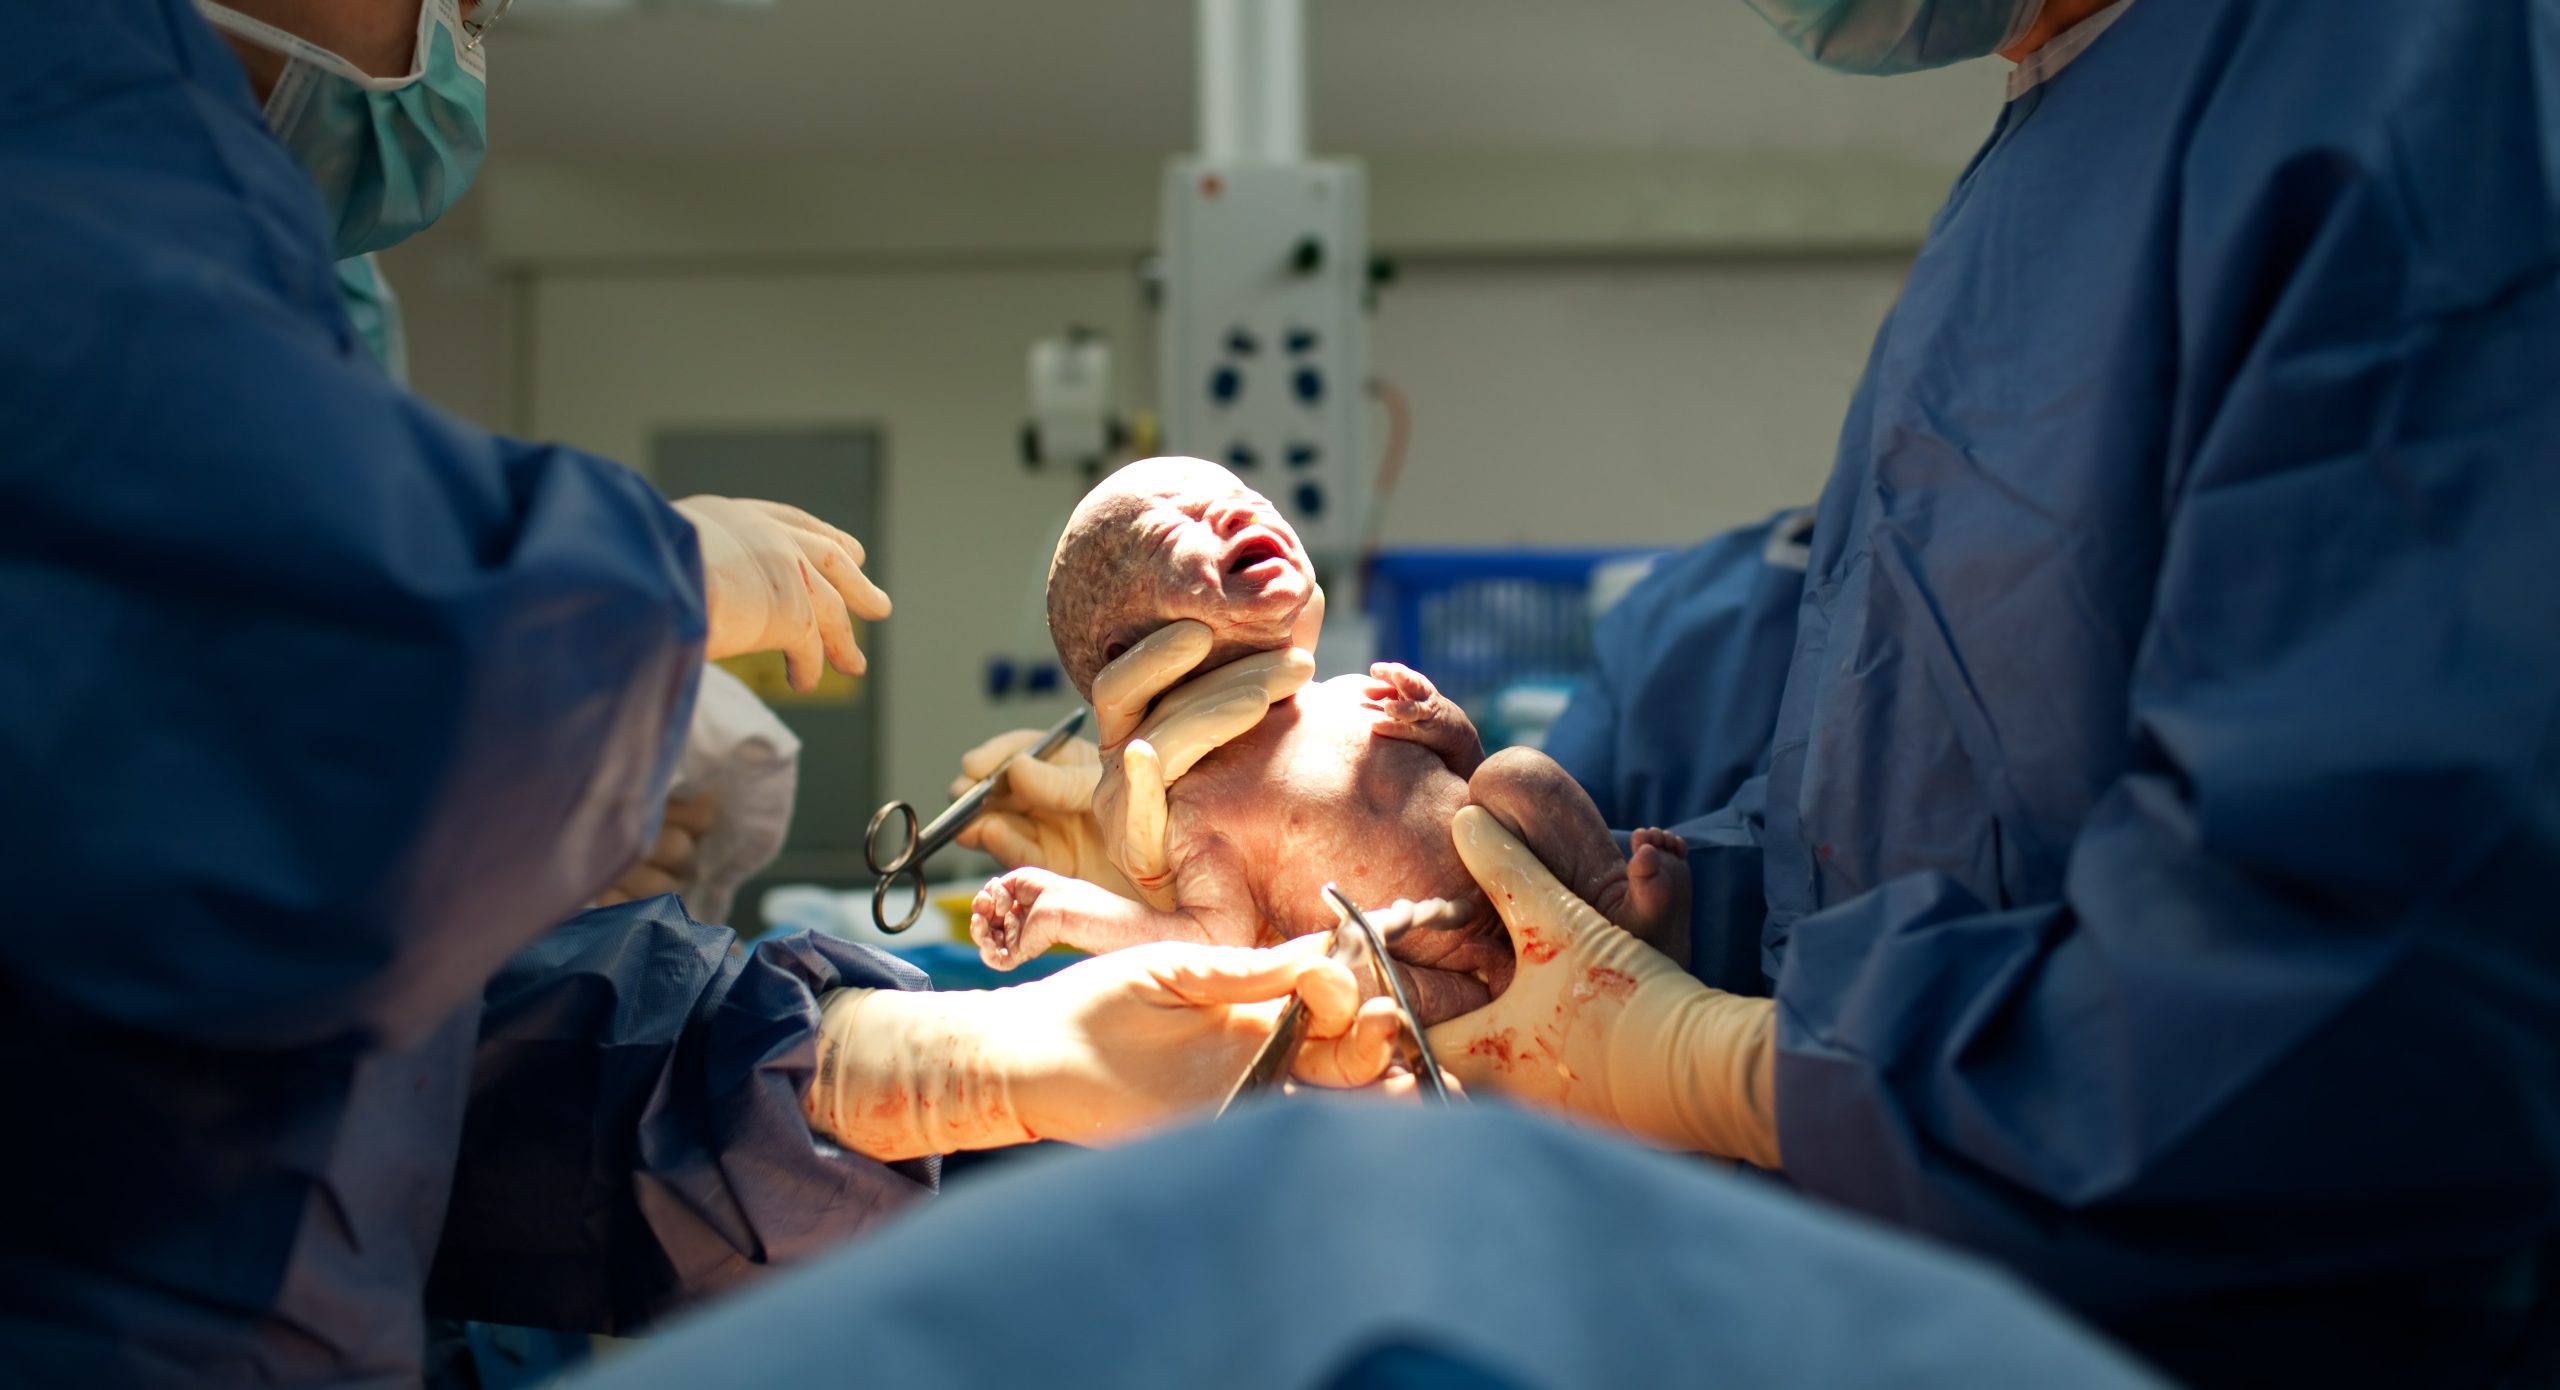 baby-being-born-via-caesarean-section-2023-11-27-05-27-16-utc-min-scaled.jpg